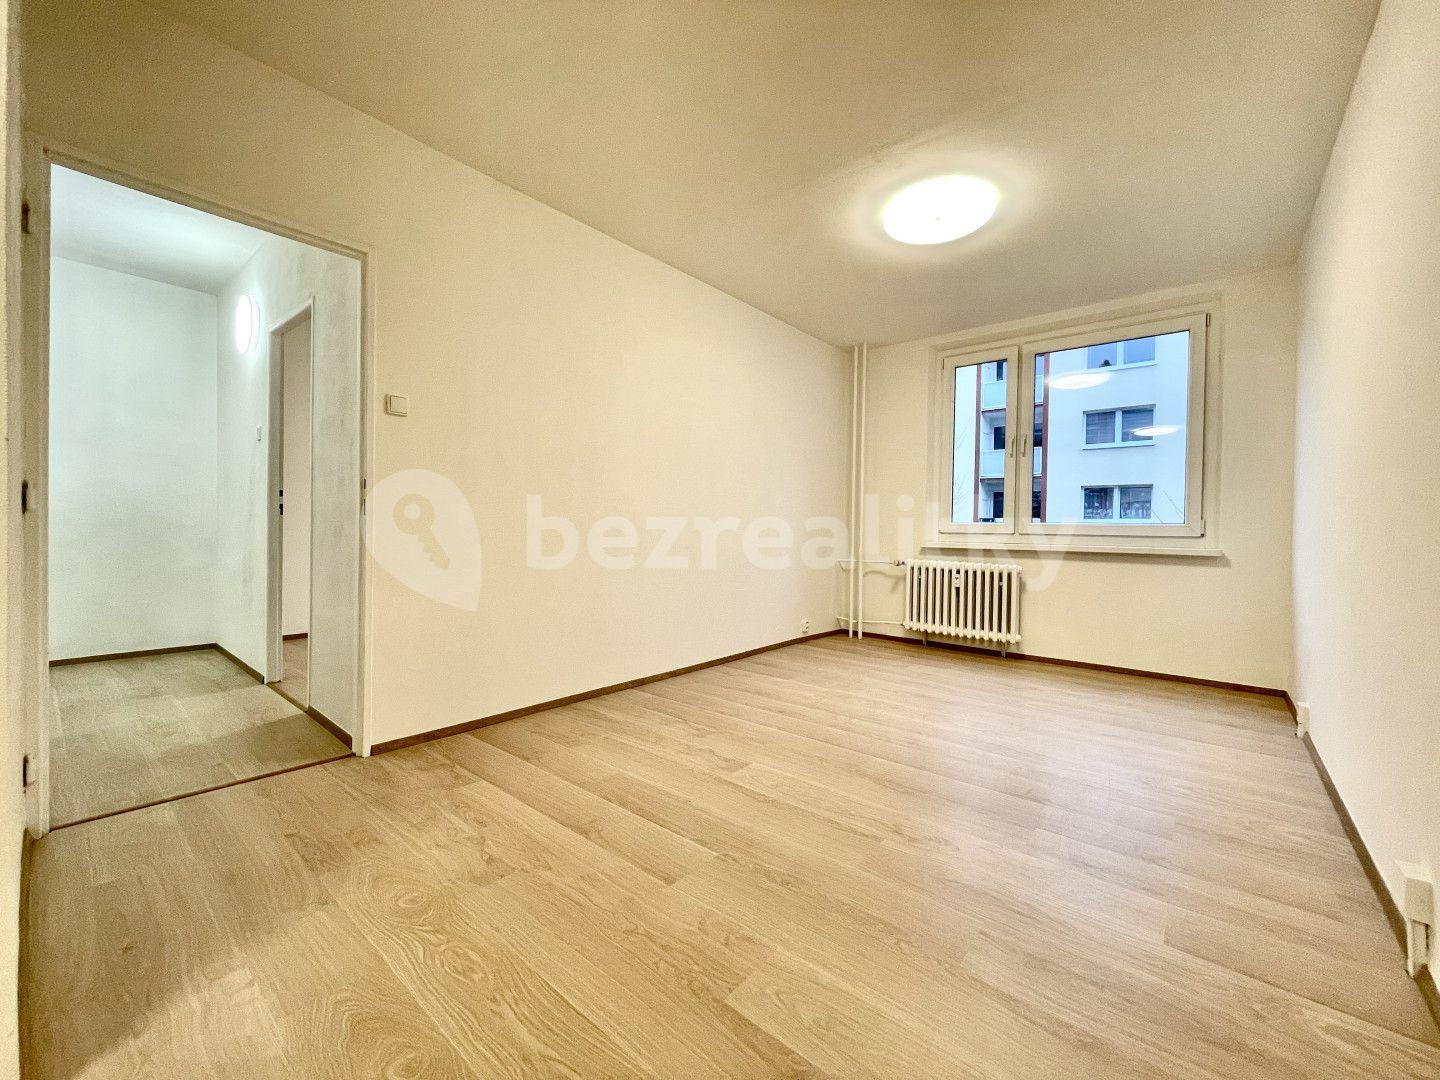 Predaj bytu 2-izbový 40 m², Jateční, Osek, Ústecký kraj